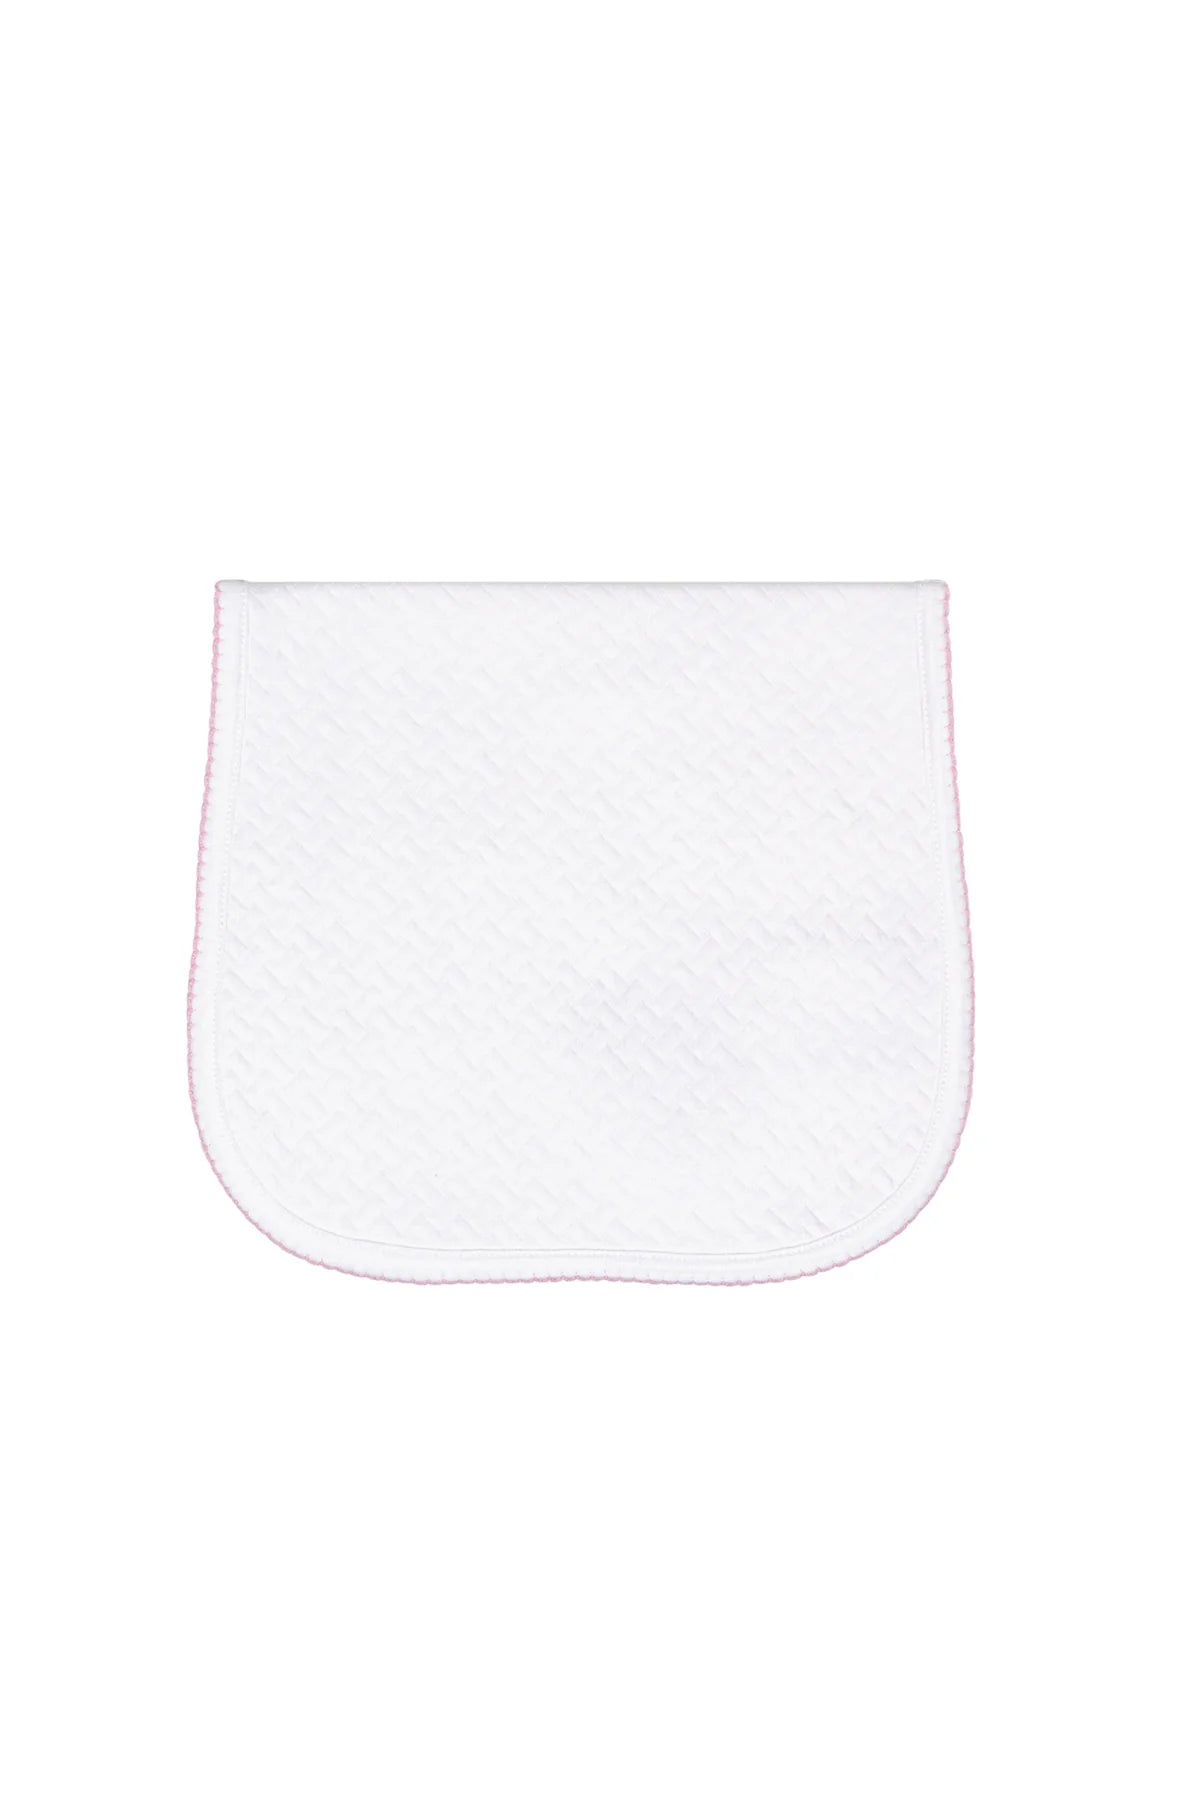 Nella Pink: Basket Weave Burp Cloth